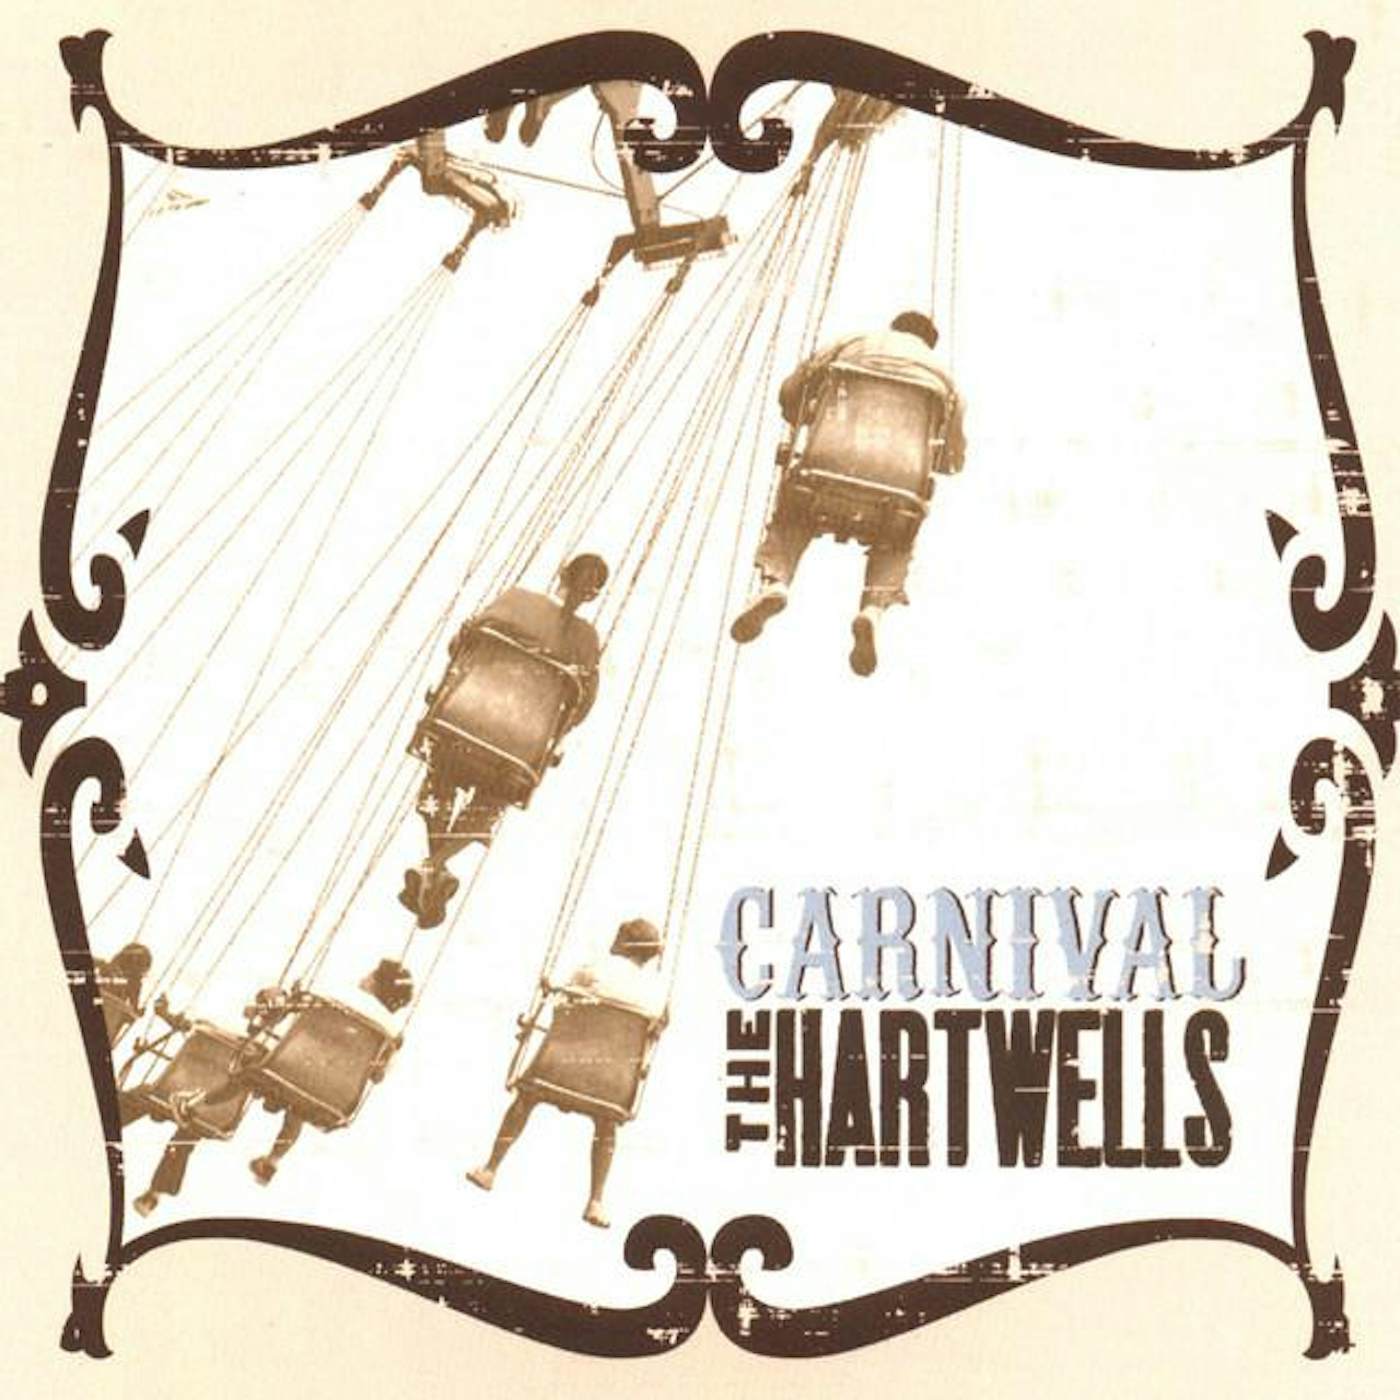 The Hartwells